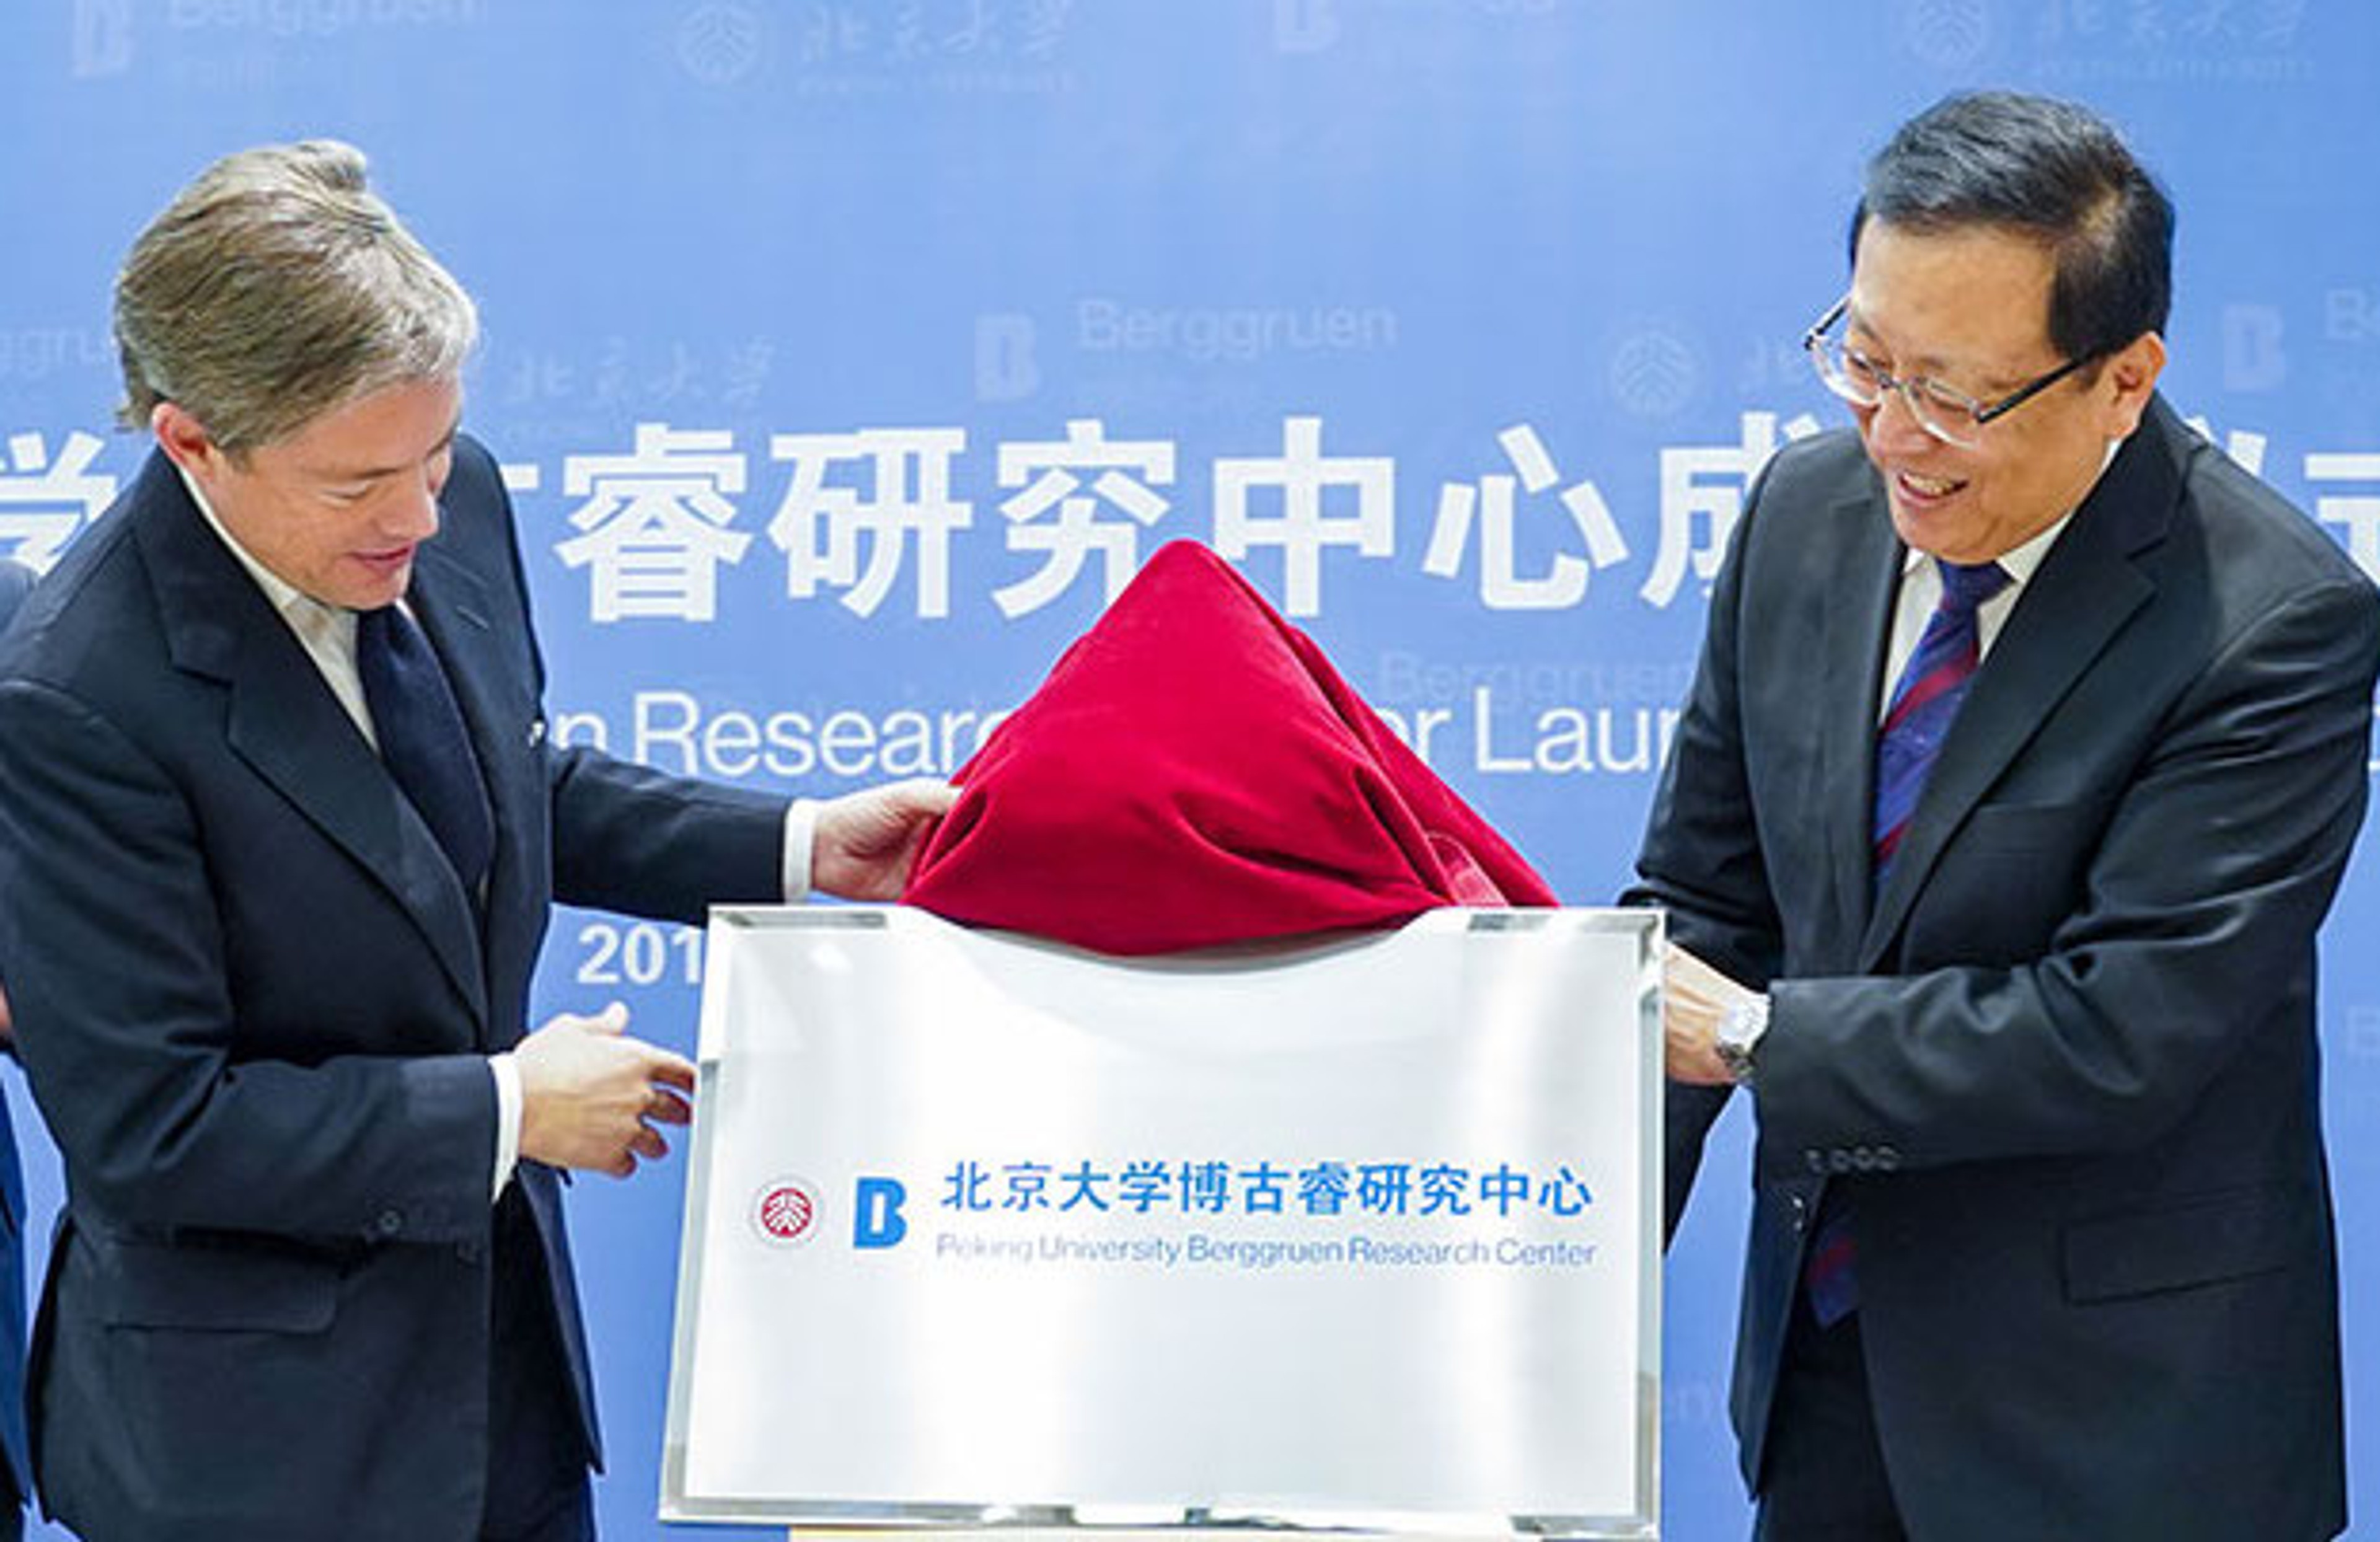 Nicolas Berggruen and Hao Ping at launch ceremony of Berggruen Research Center at Peking University